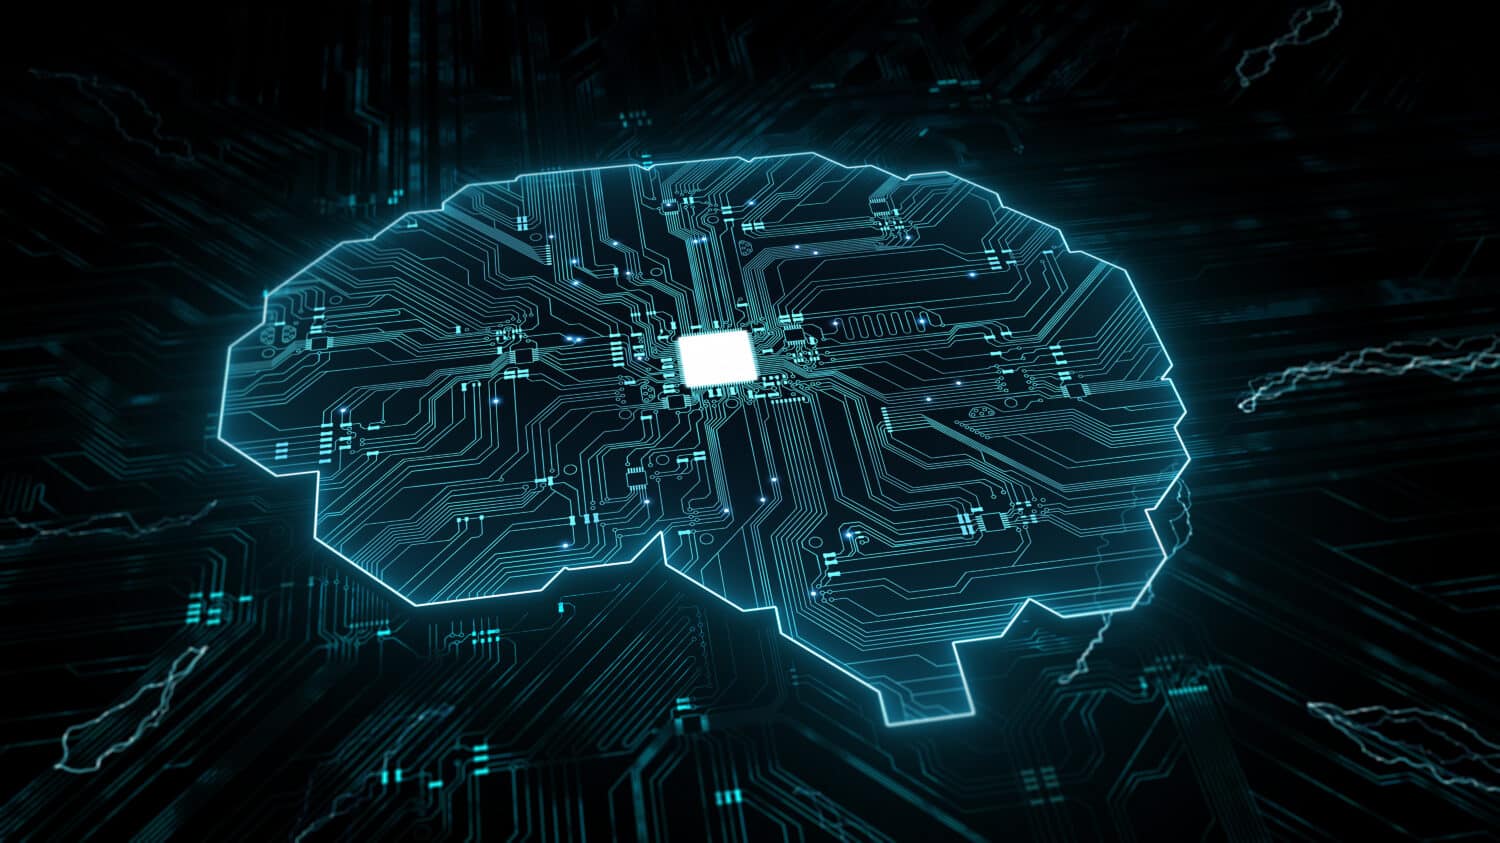 Artificial intelligence (AI), data mining, deep learning modern computer technologies. Futuristic Cyber Technology Innovation. Brain representing artificial intelligence with printed circuit board (